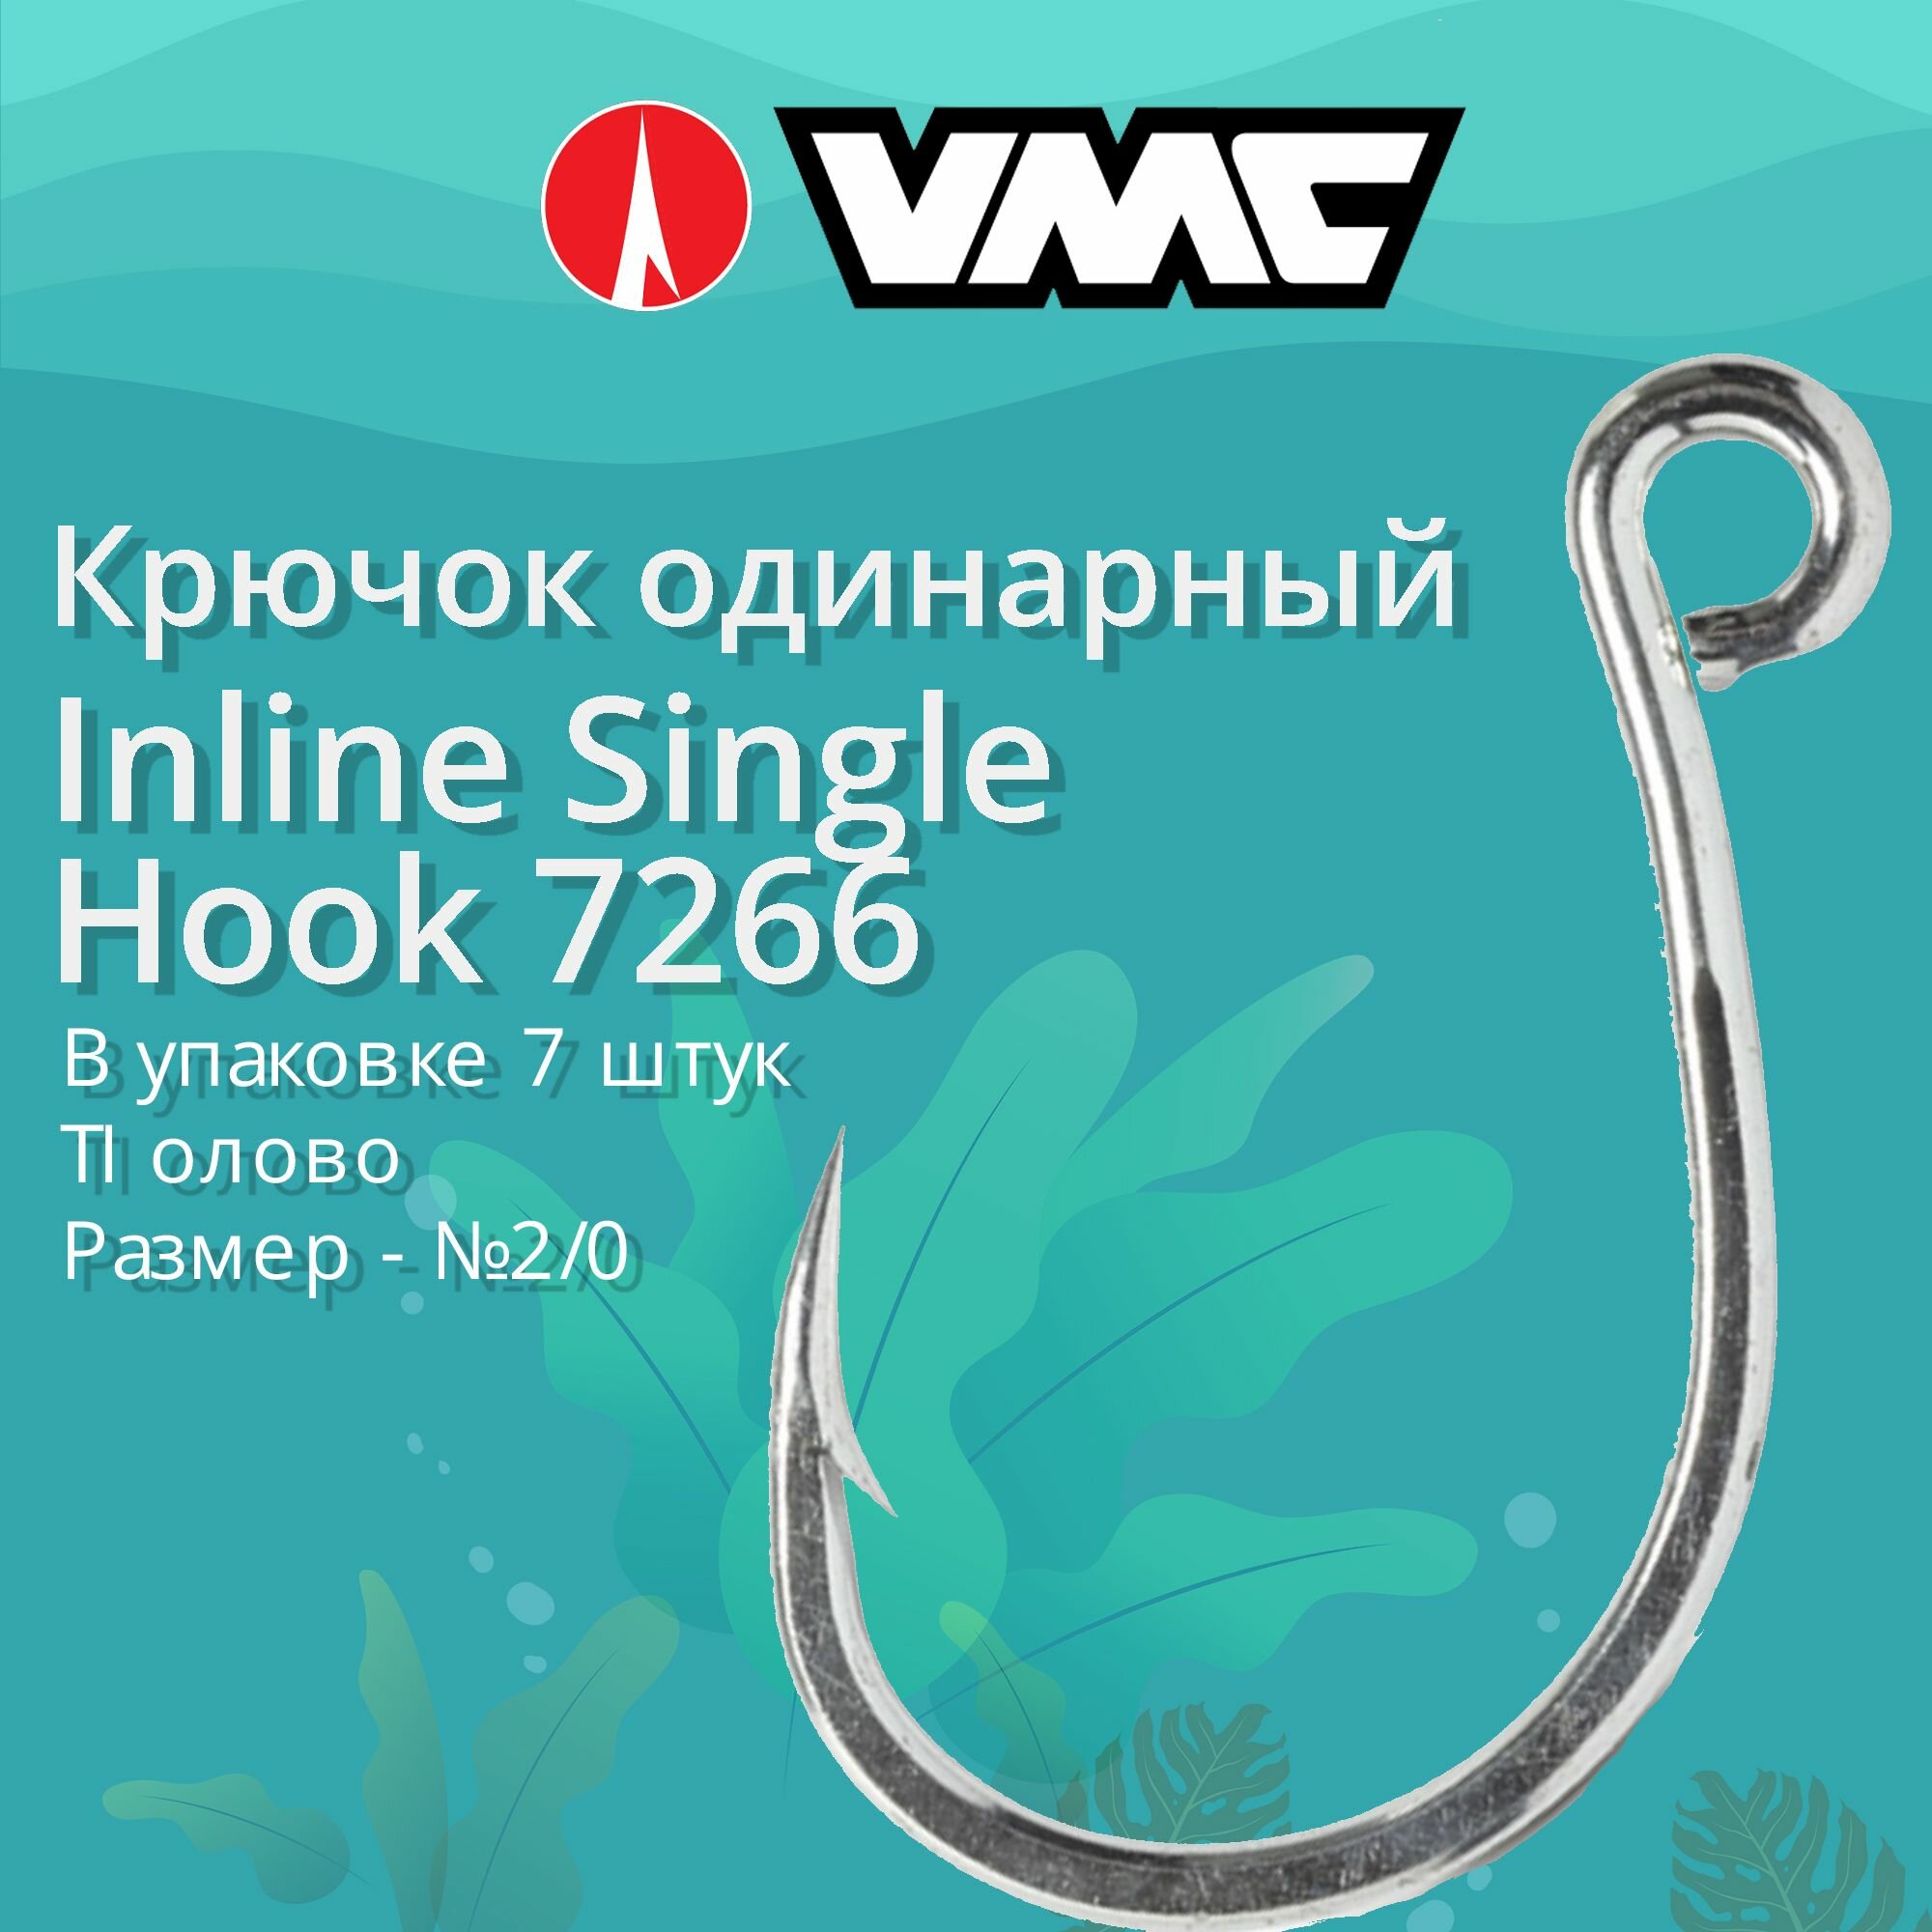 Крючки для рыбалки (одинарный) VMC Inline Single Hook 7266 TI (олово) №2/0 упаковка 7 штук